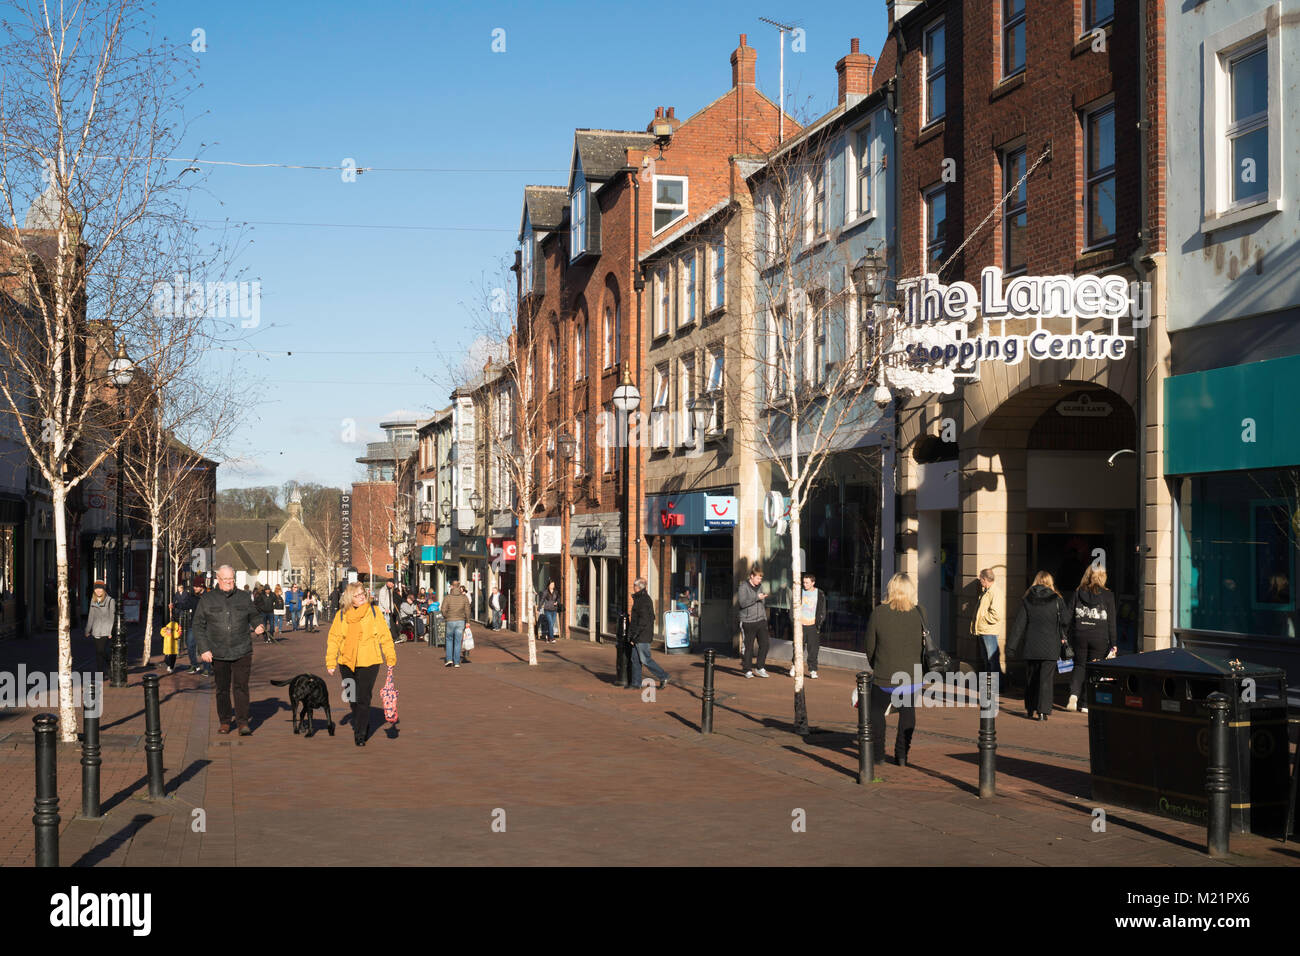 People walking down Scotch Street, Carlisle city centre, Cumbria, England, UK Stock Photo